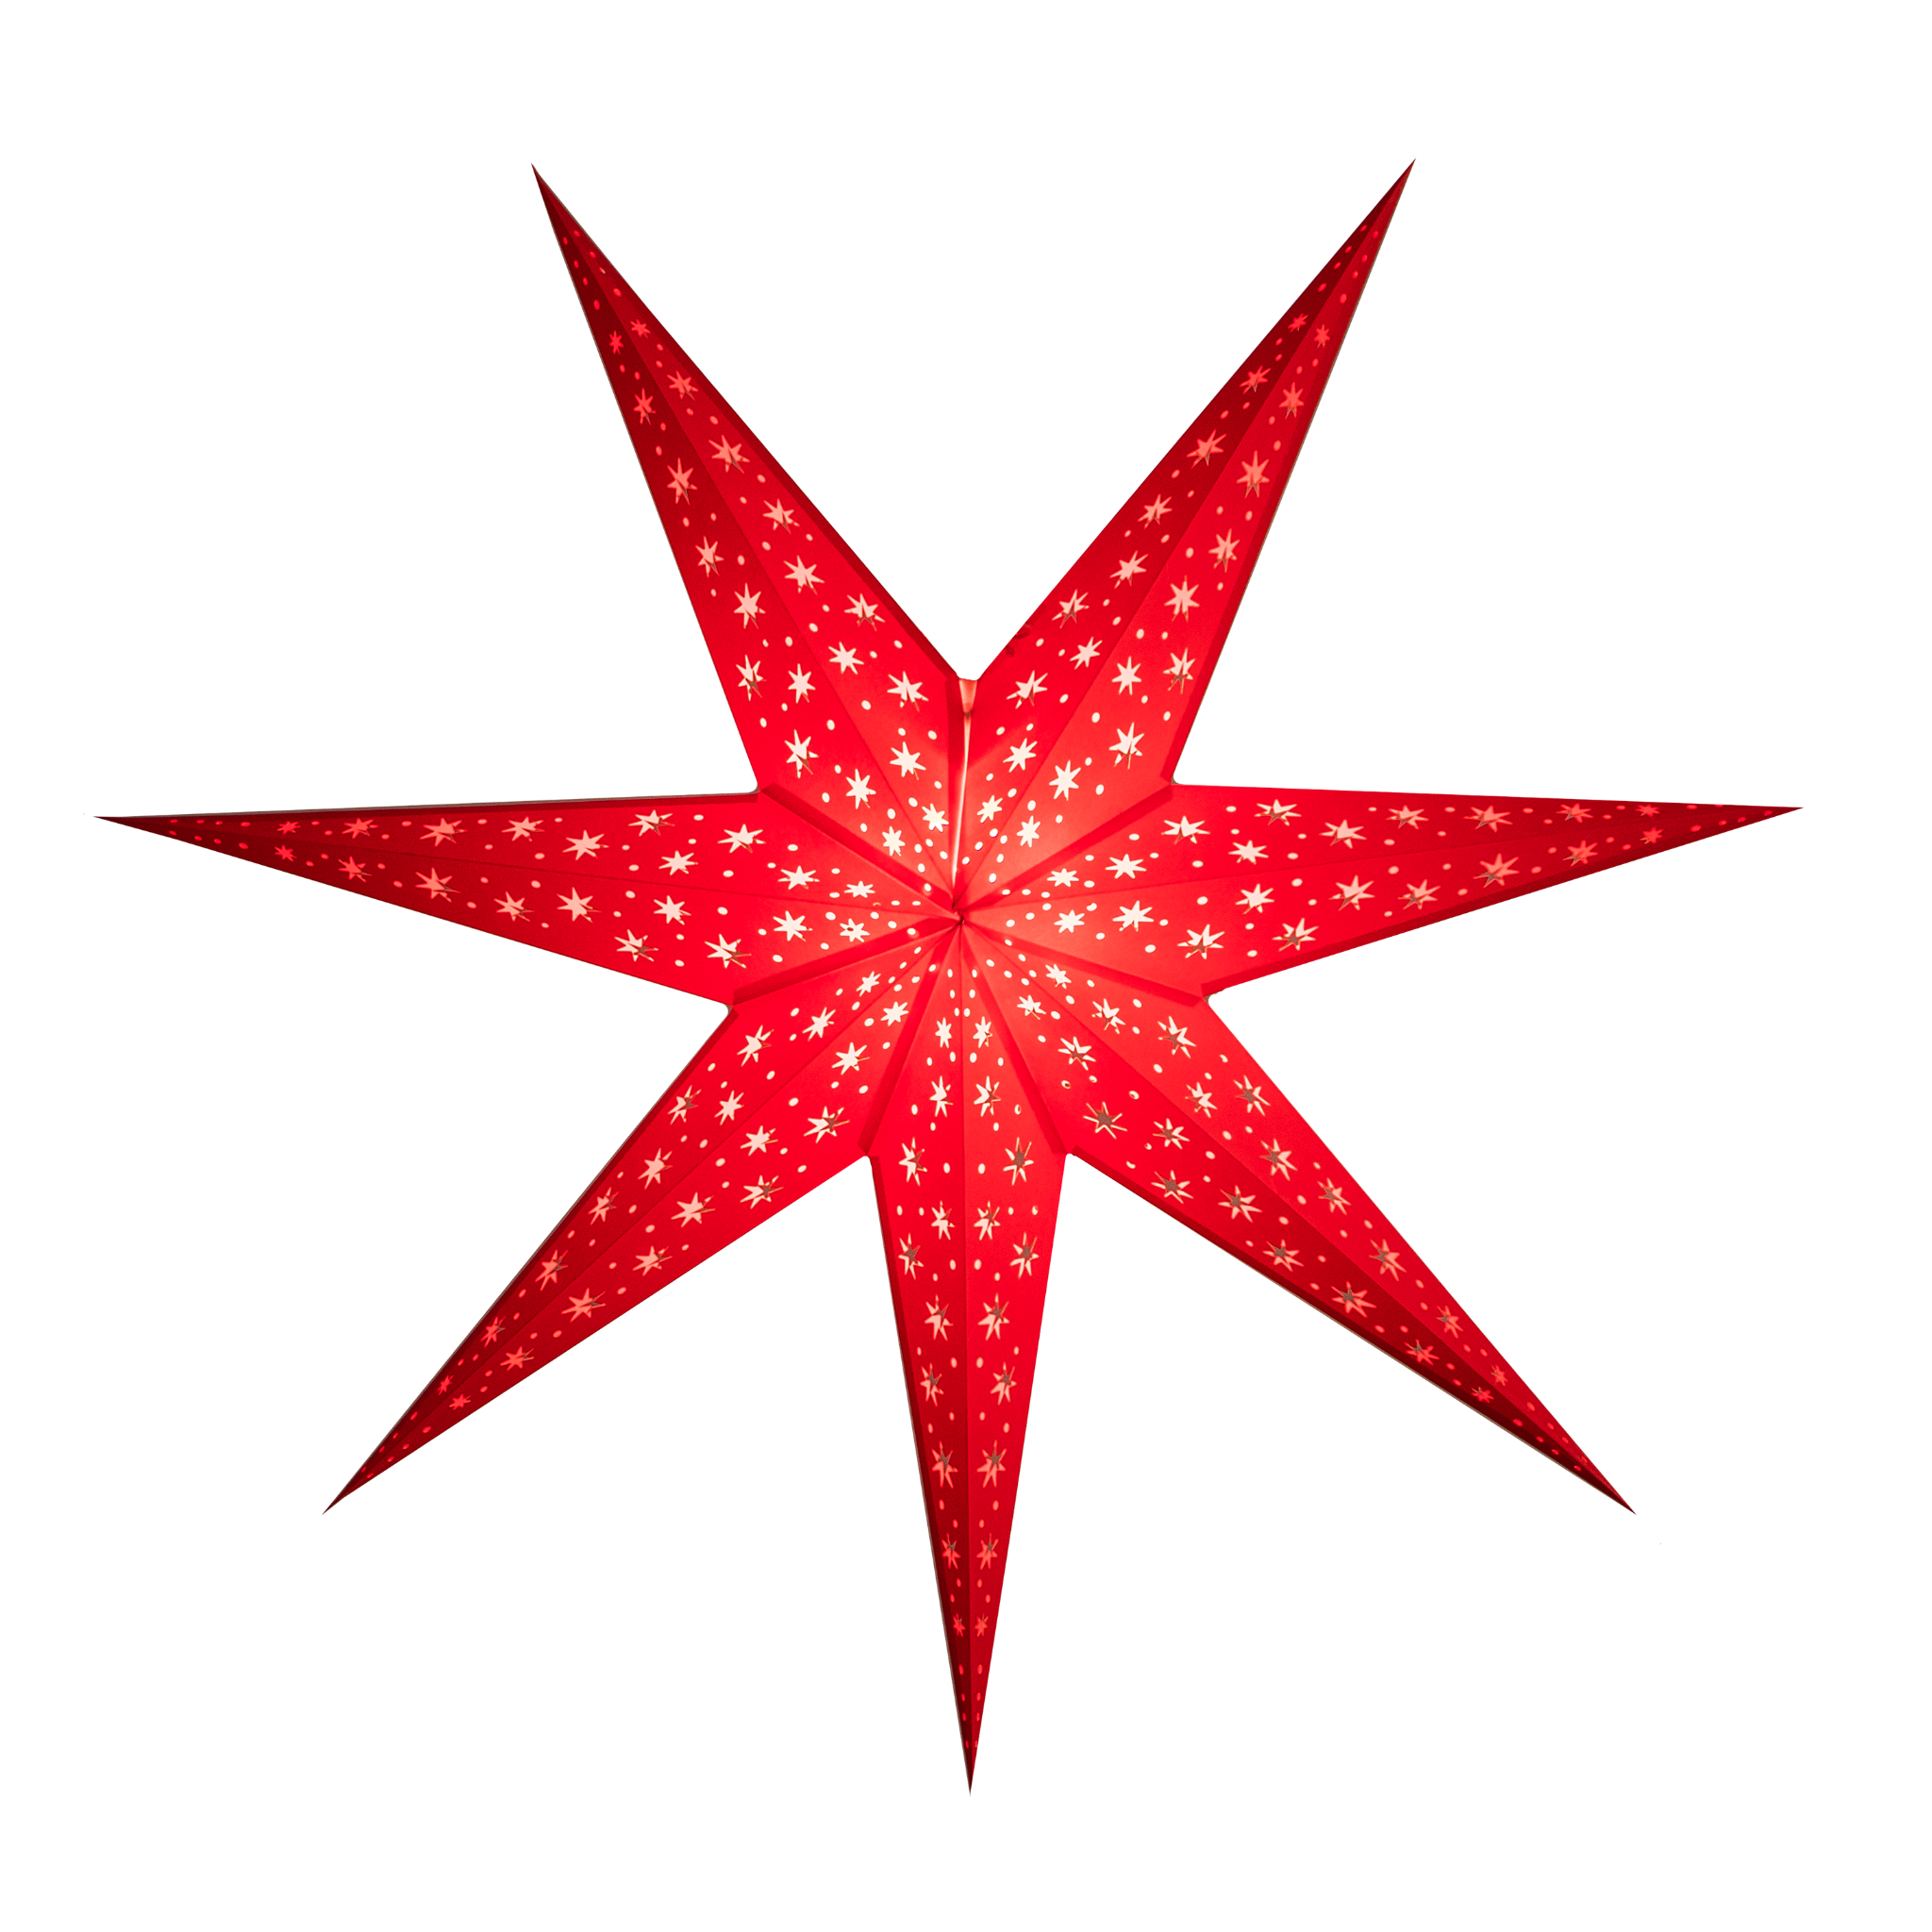 red paper star lantern - large Christmas star decoration